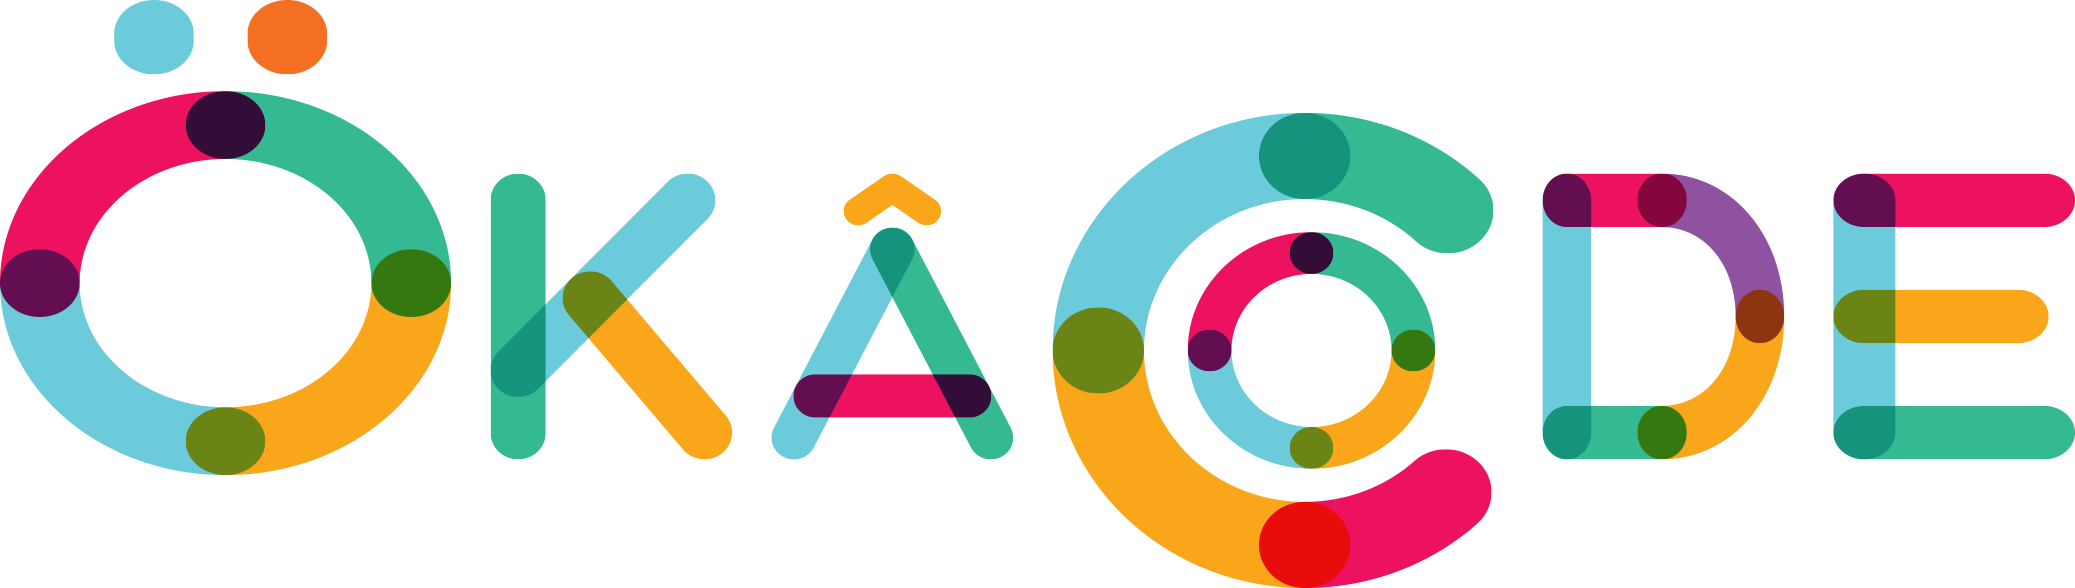 logo okacode